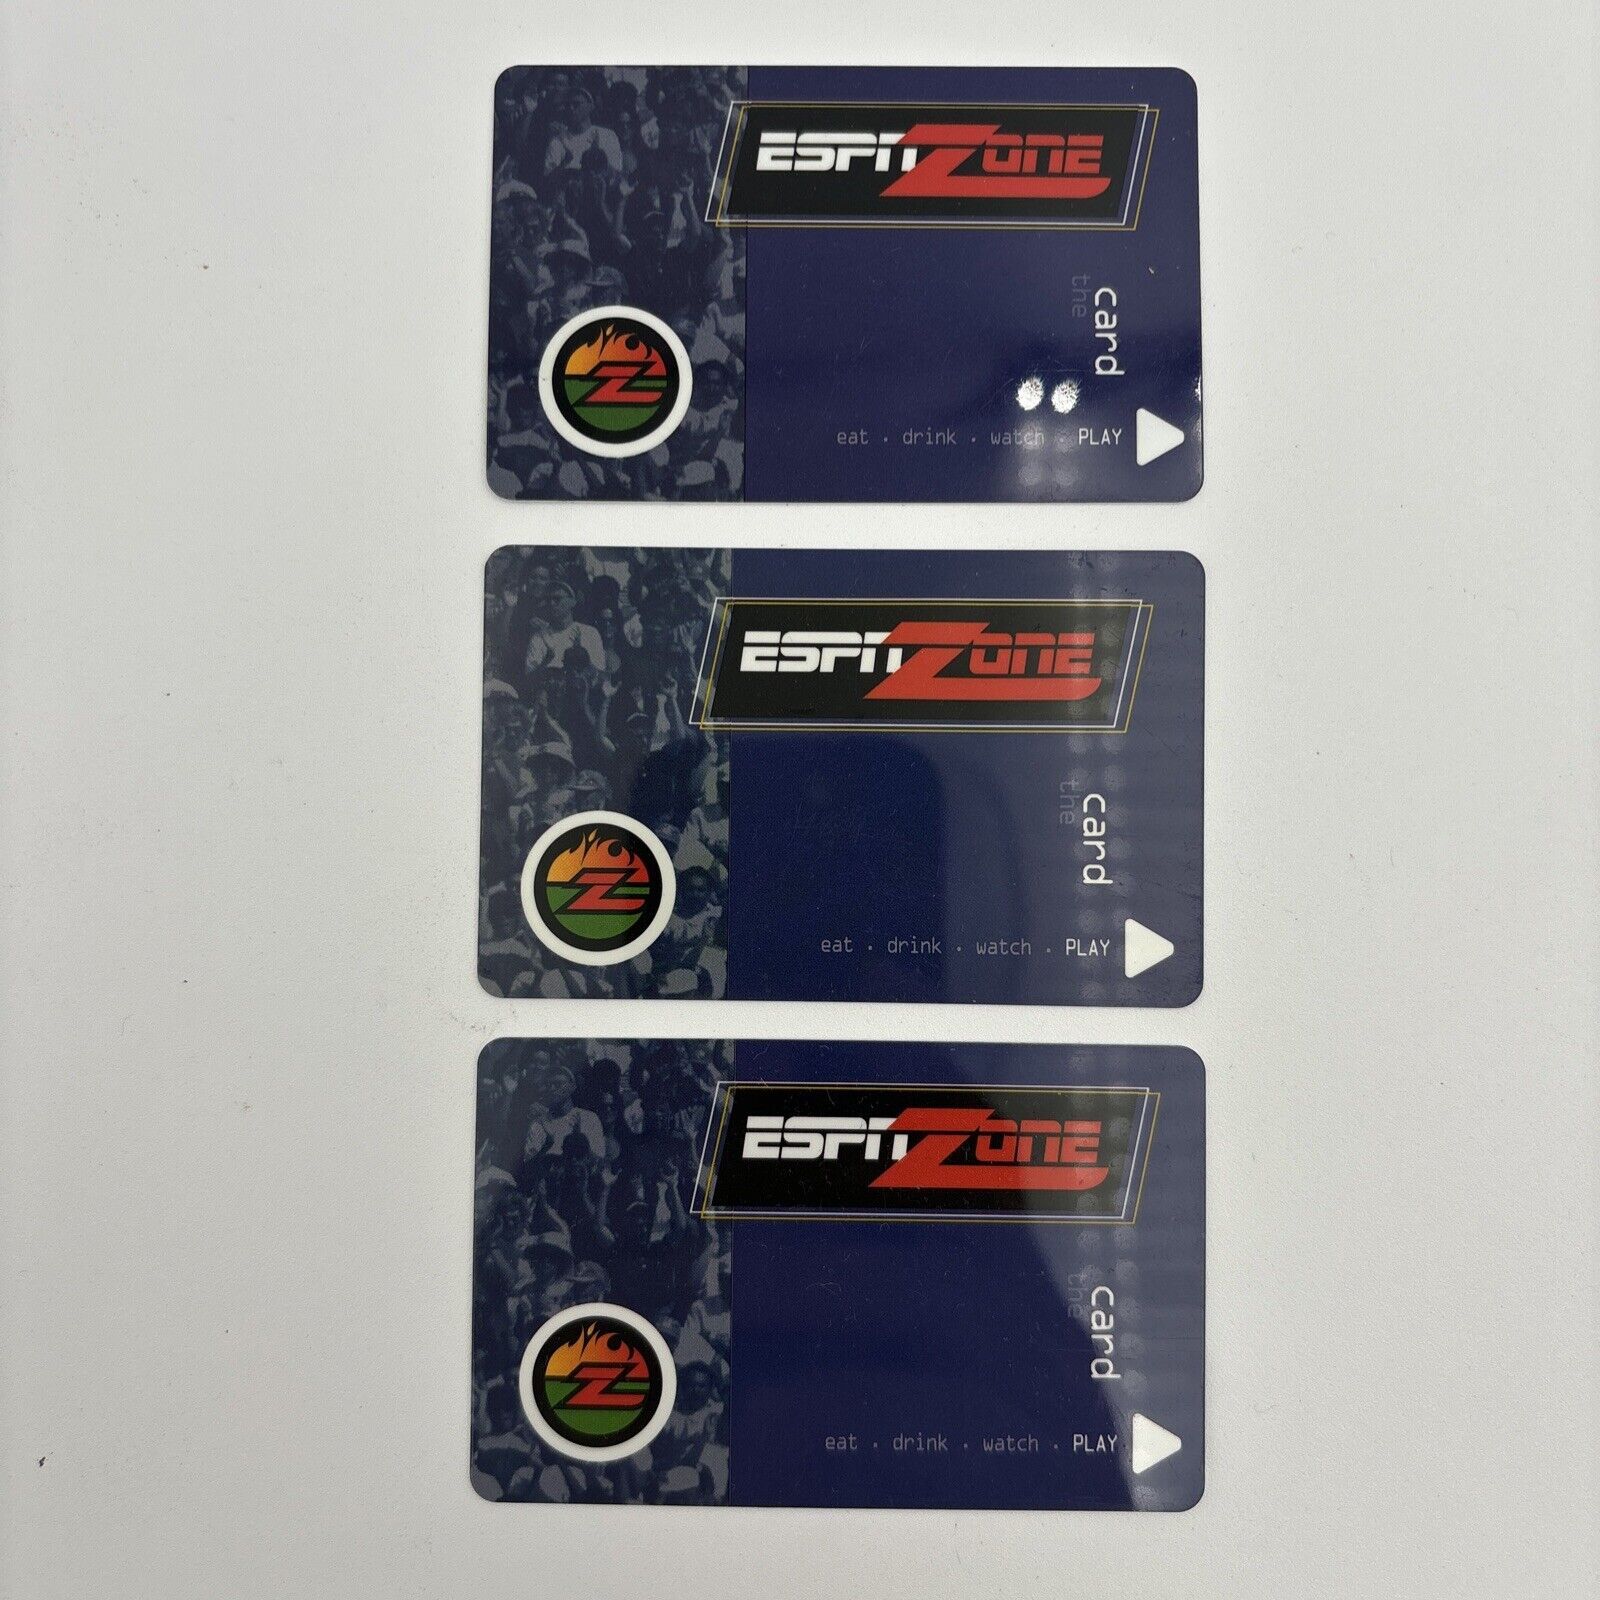 ESPN Zone Play Card